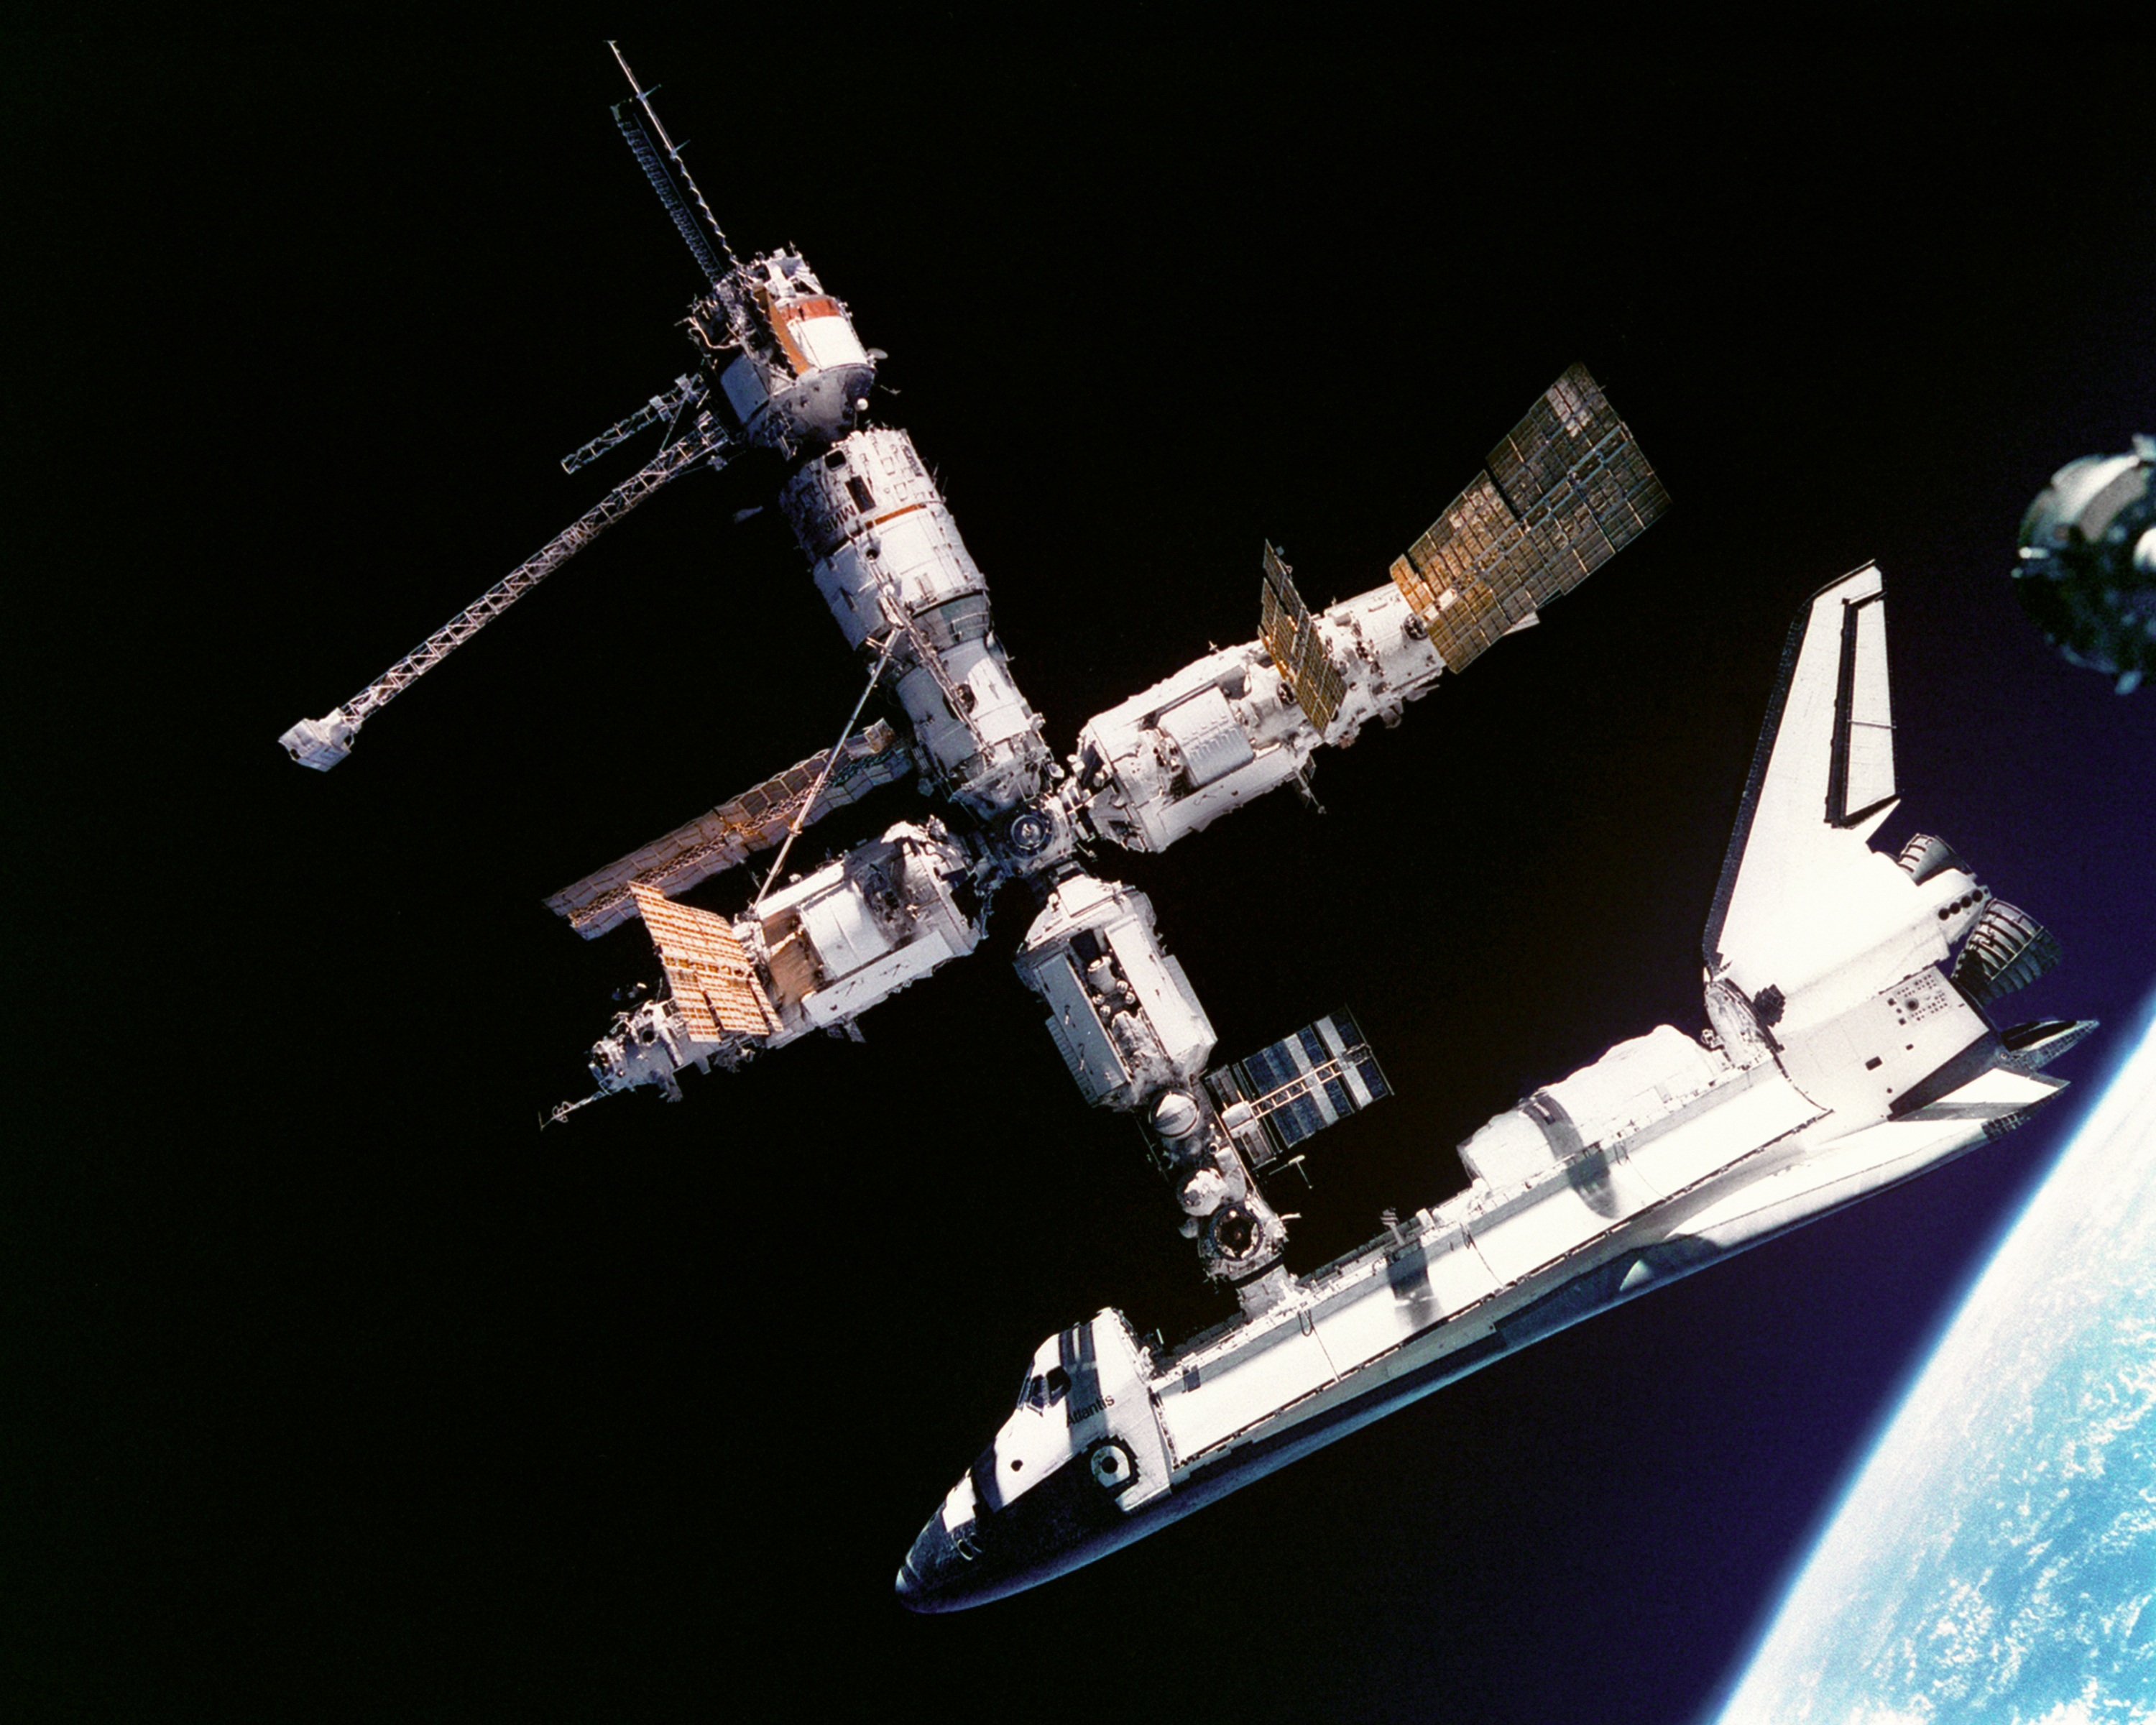 Atlantis Space Shuttle, Atlantis, Lunar, Mission, Nasa, HQ Photo